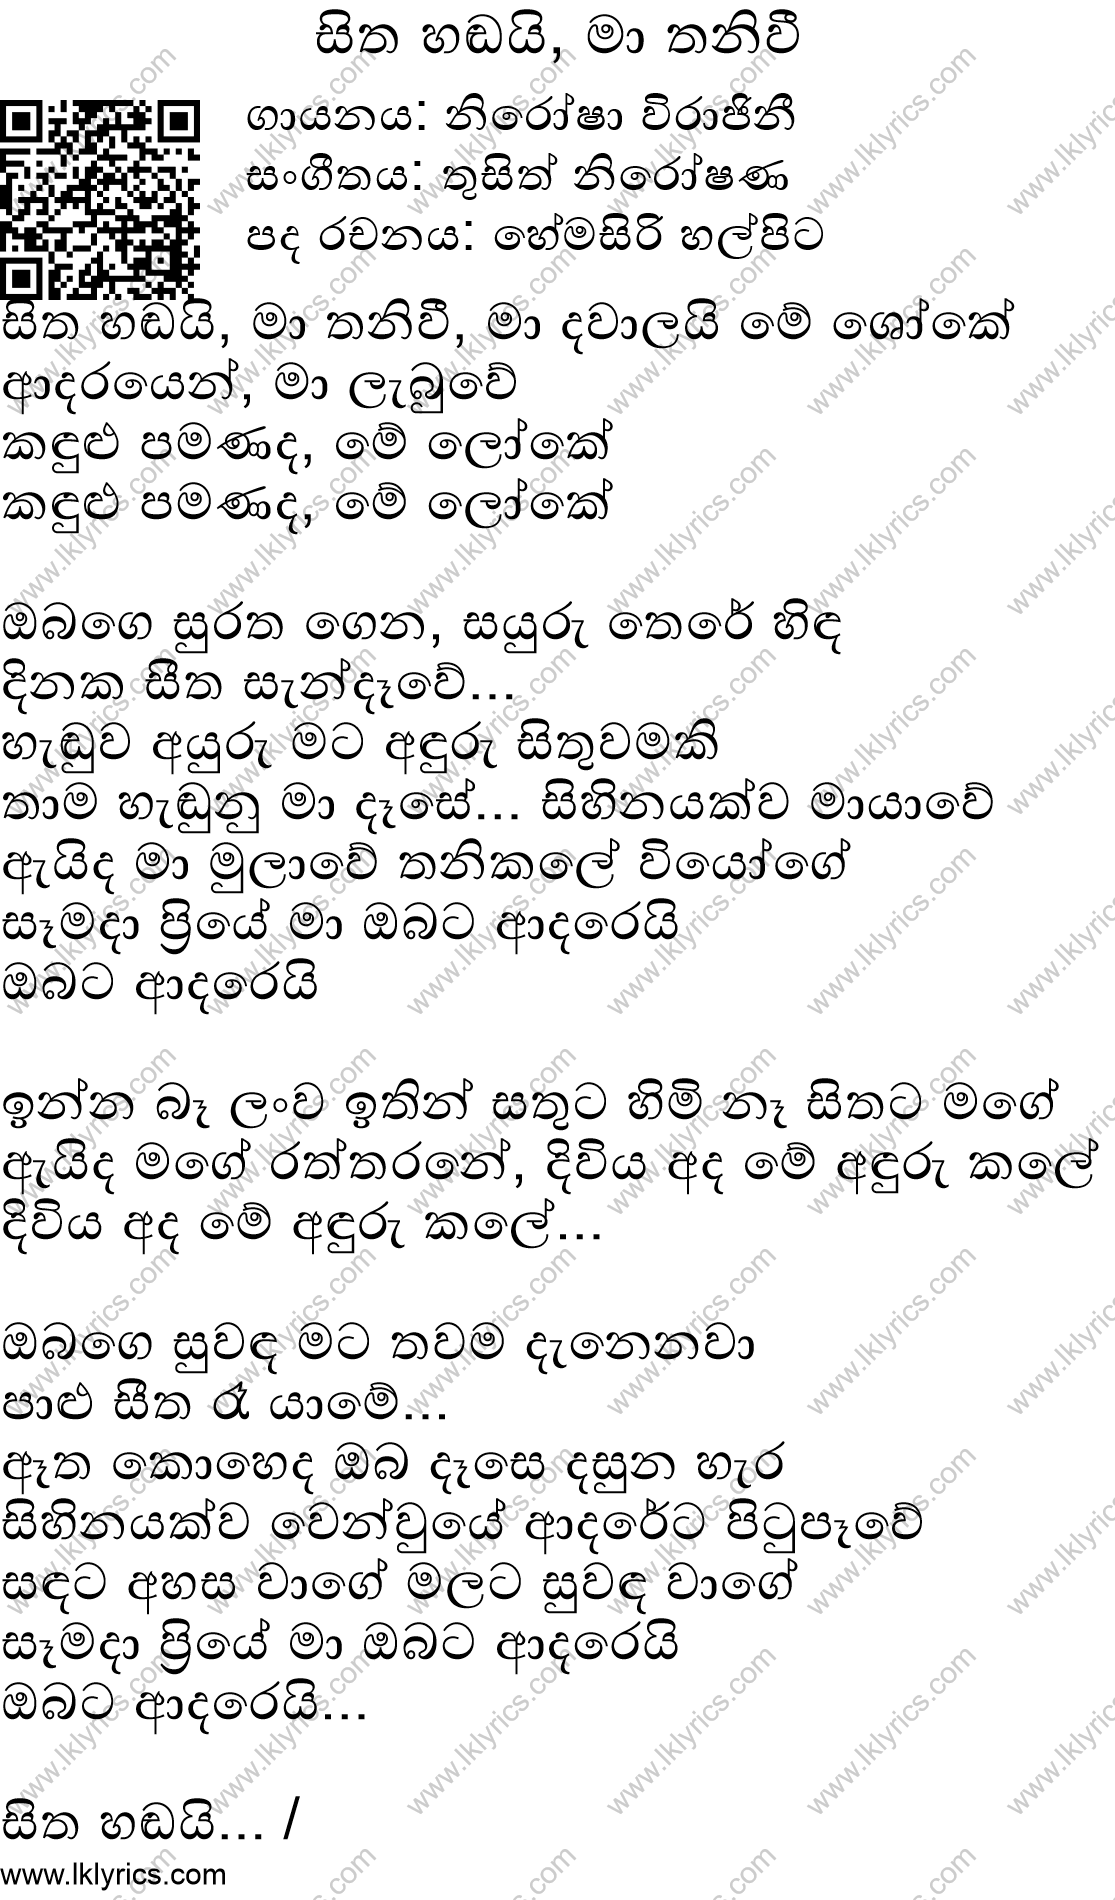 Sitha Handai Ma Thaniwi Lyrics